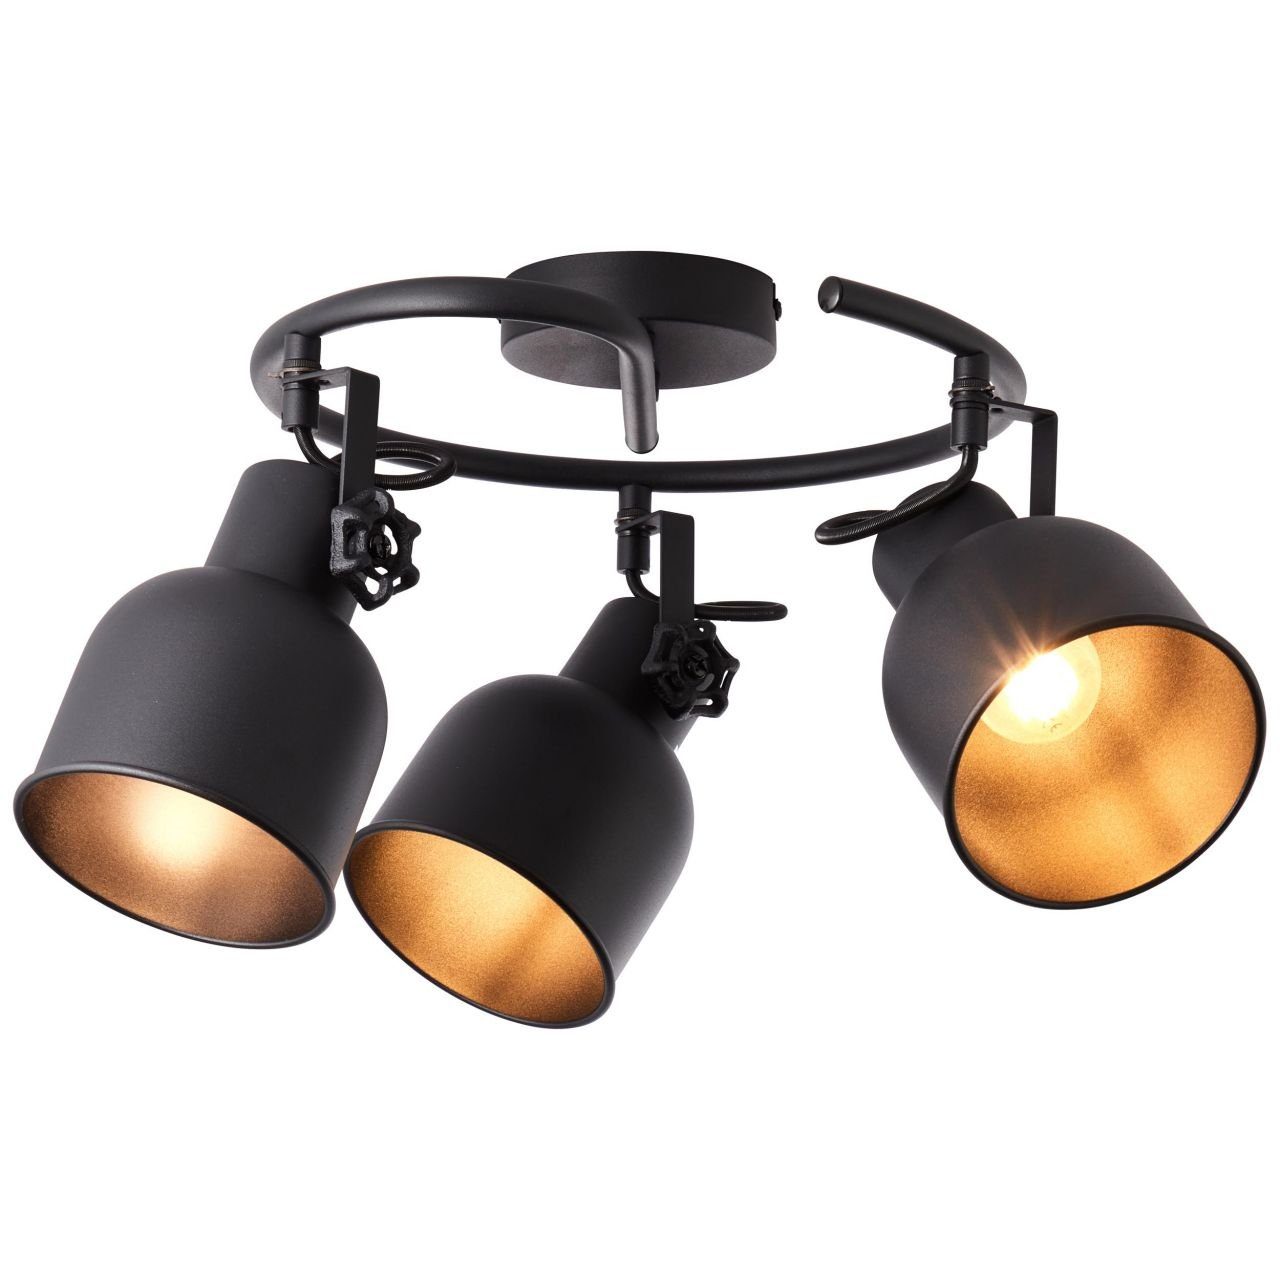 Lampe, schwarz, 18W,T 3flg Spotspirale Brilliant E14, 3x sand Deckenleuchte D45, Rolet Metall, Rolet,